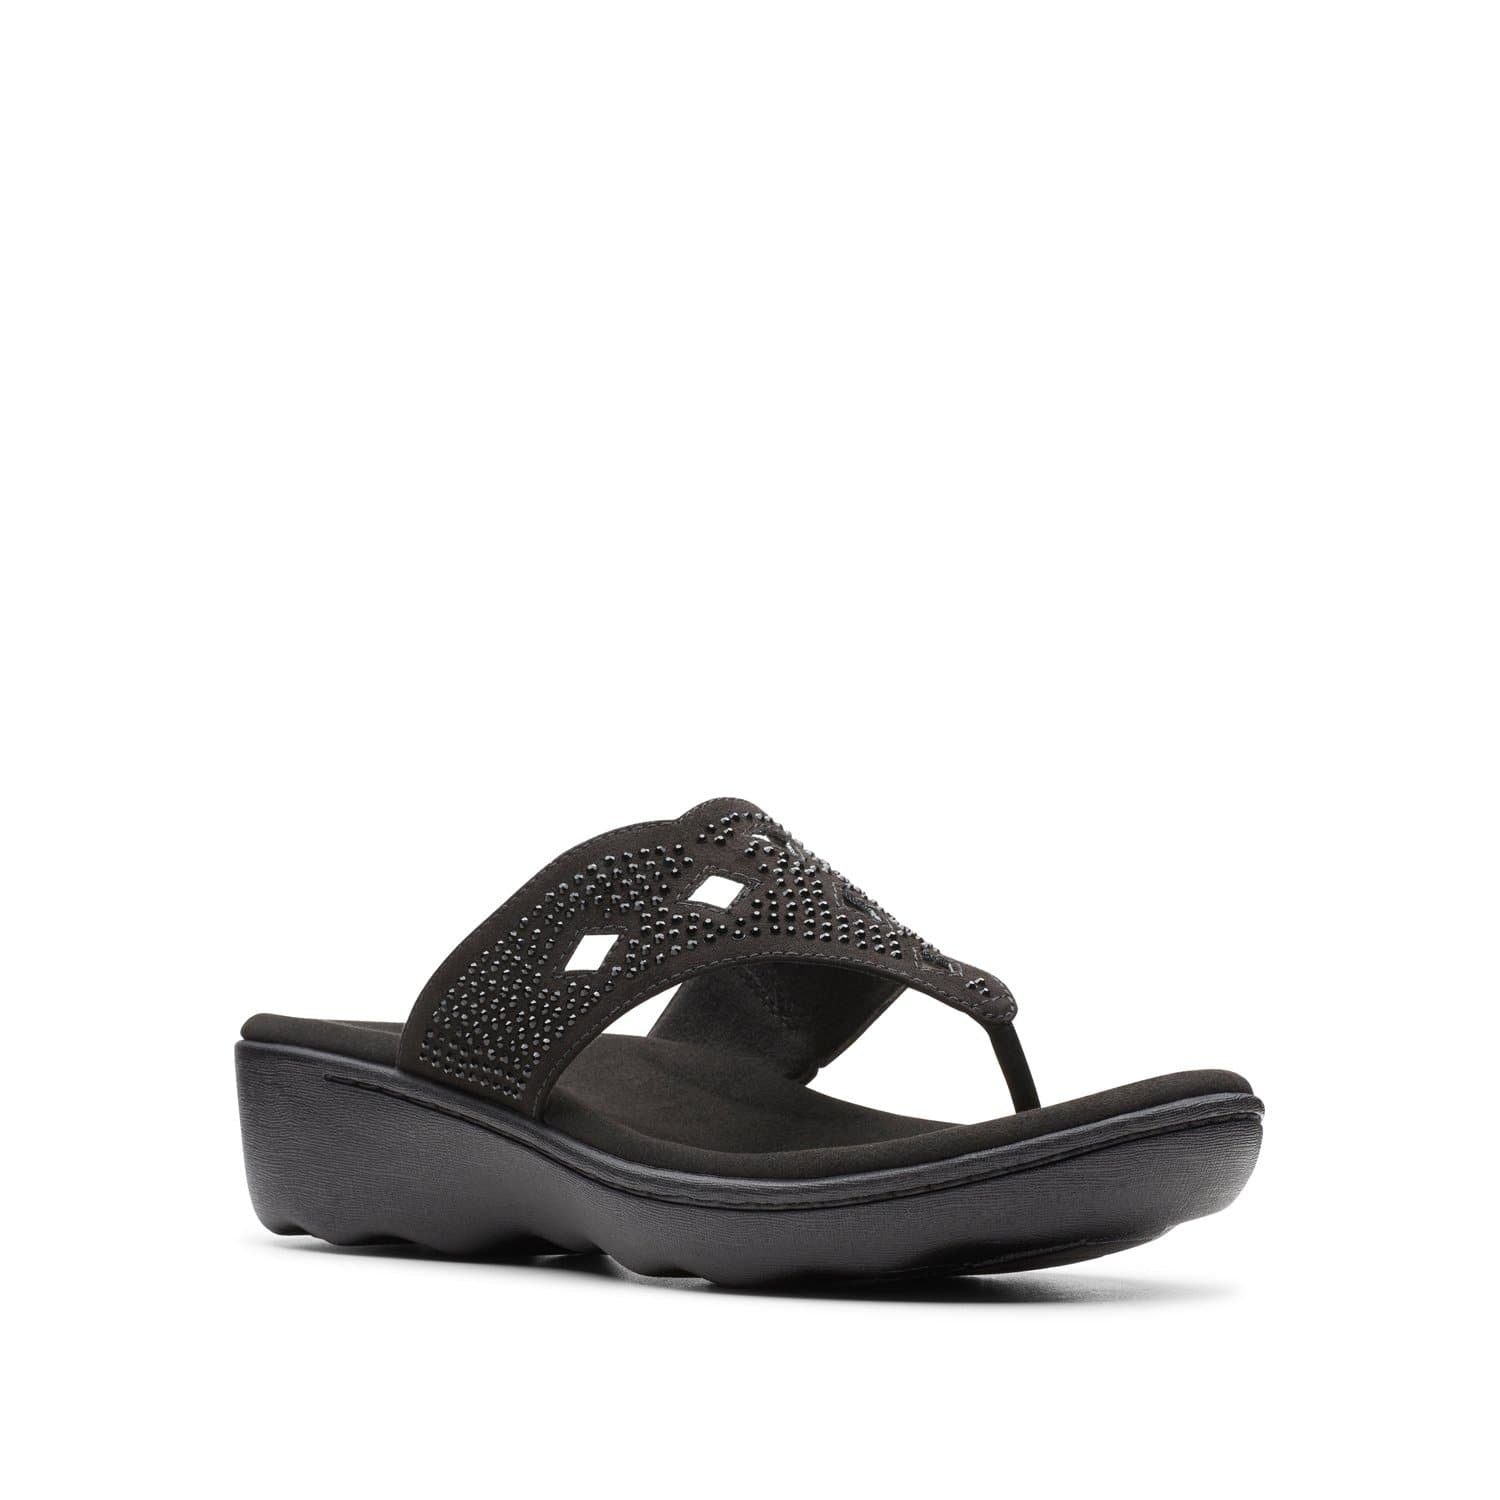 Clarks-Phebe-Bell-Women's-Sandals-Black-26145216